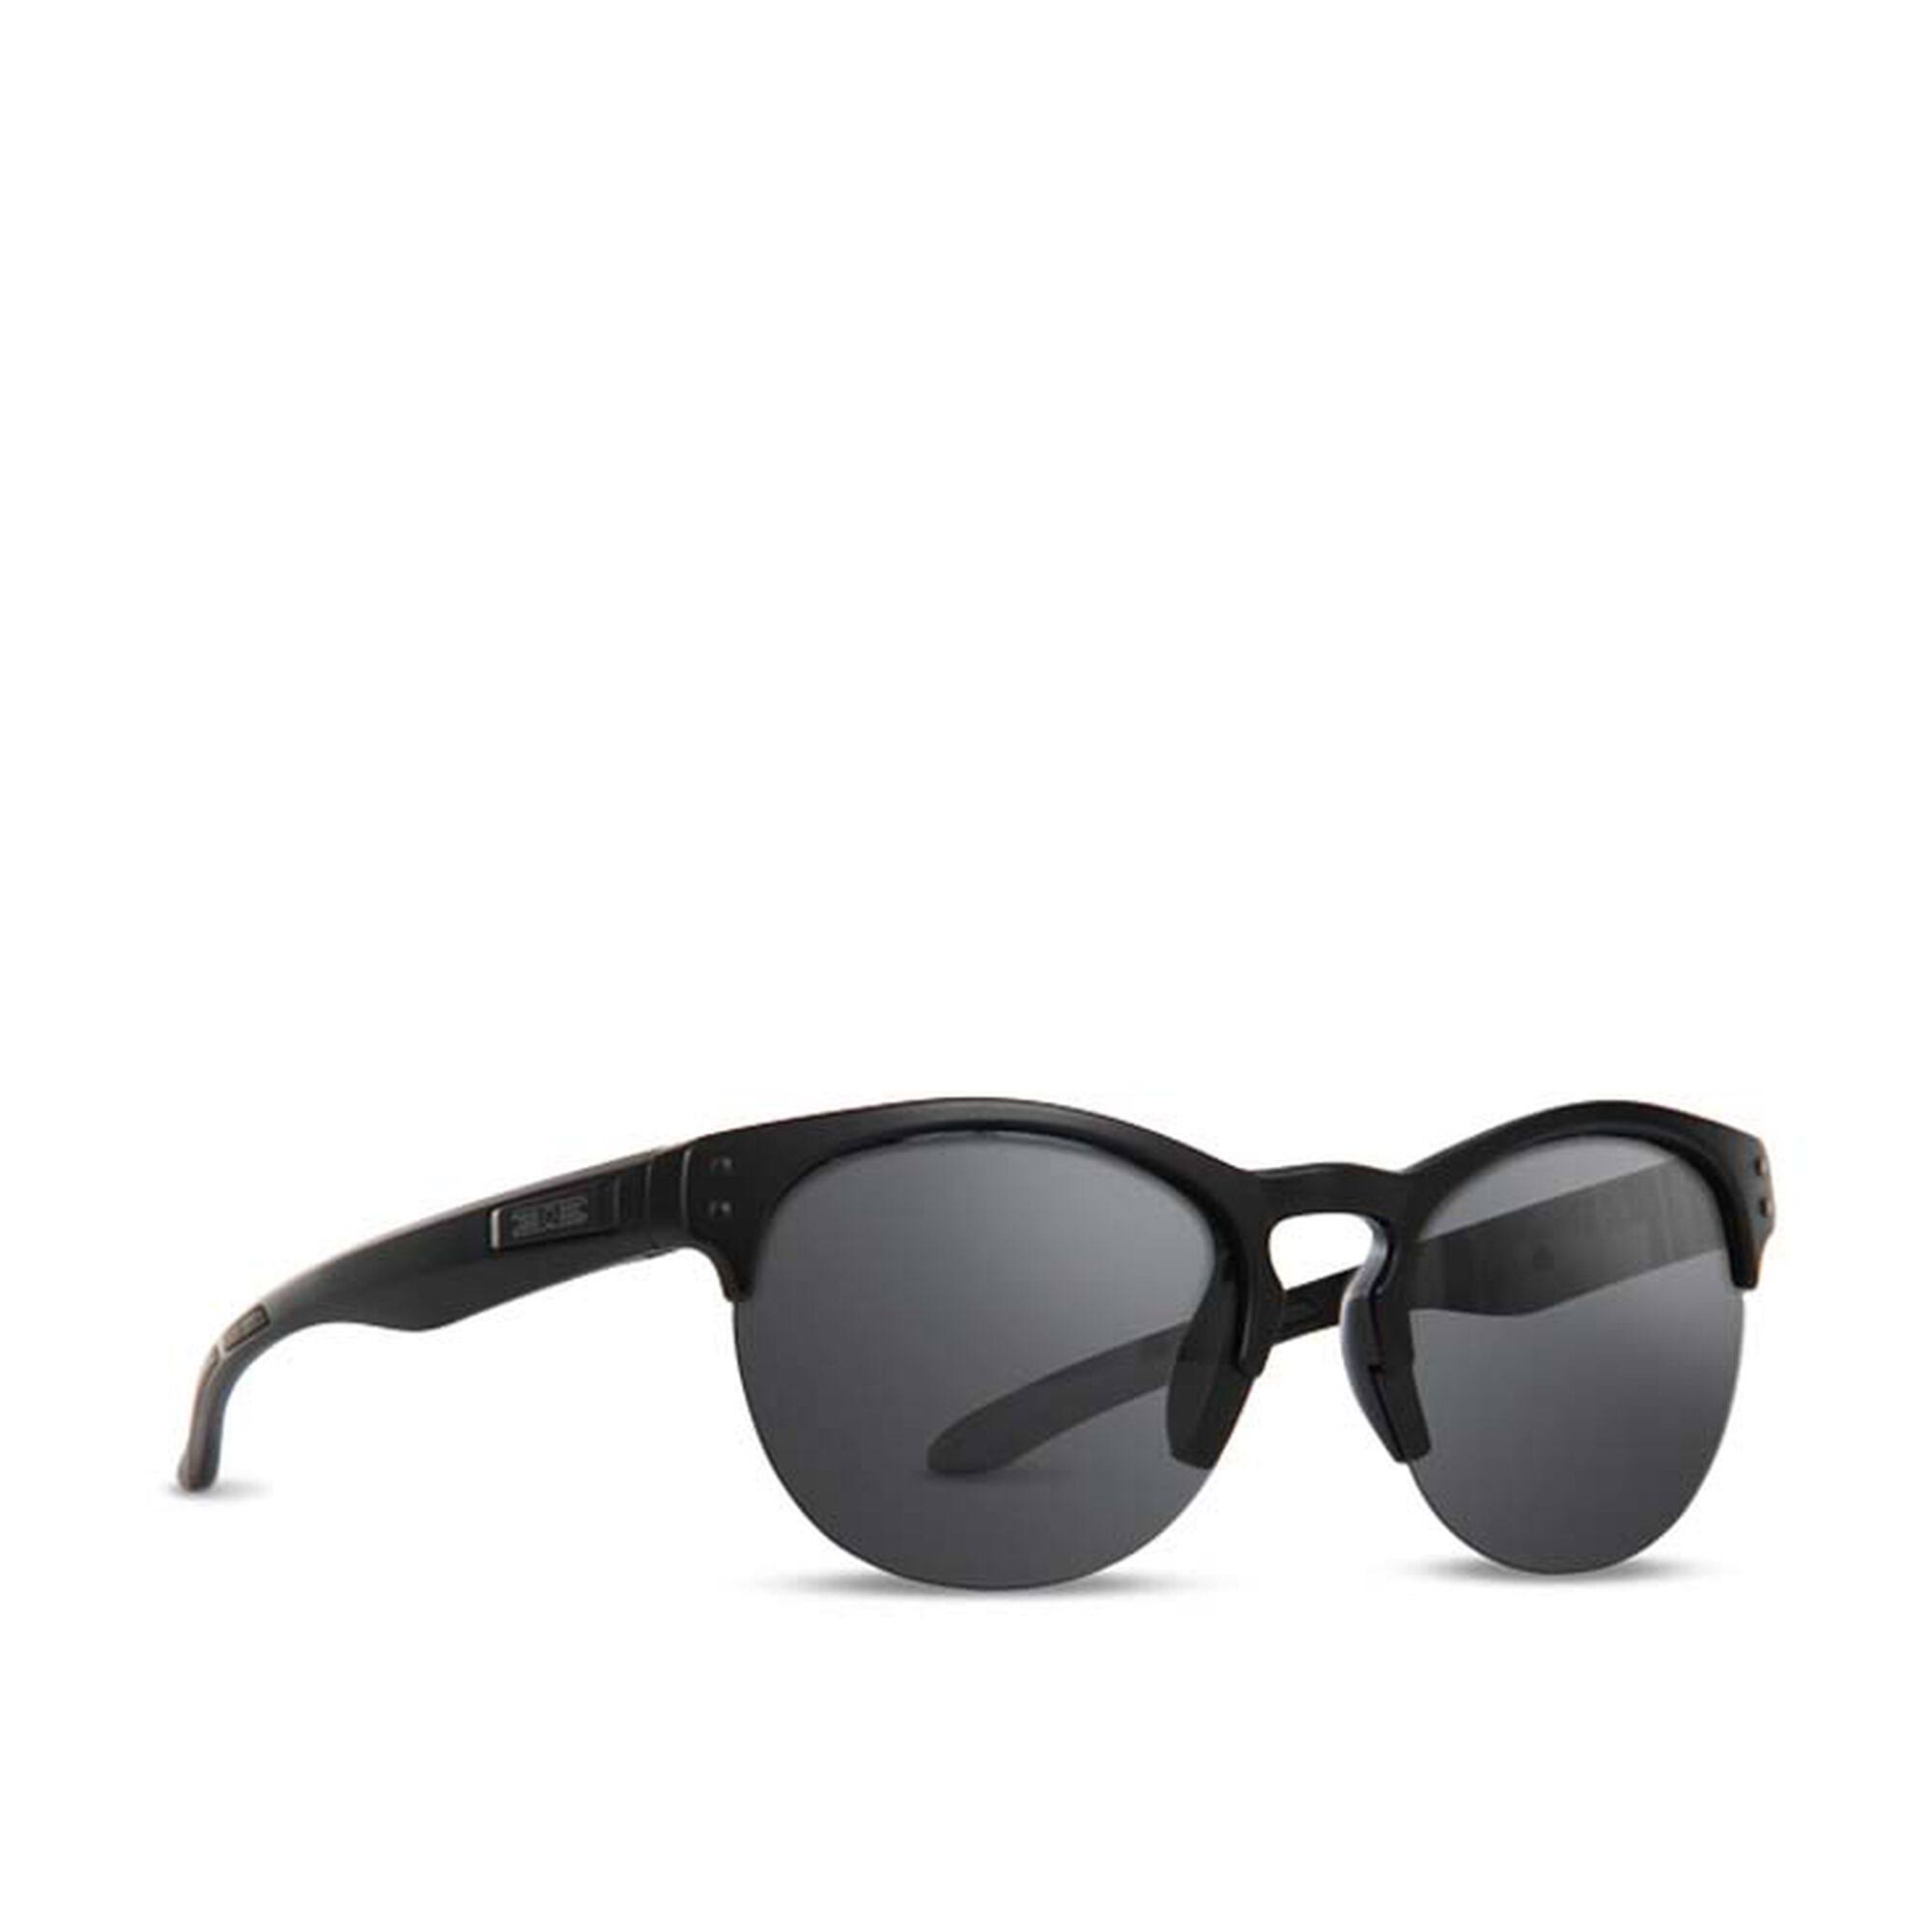 Epoch Sierra Sunglasses Black/Smoke